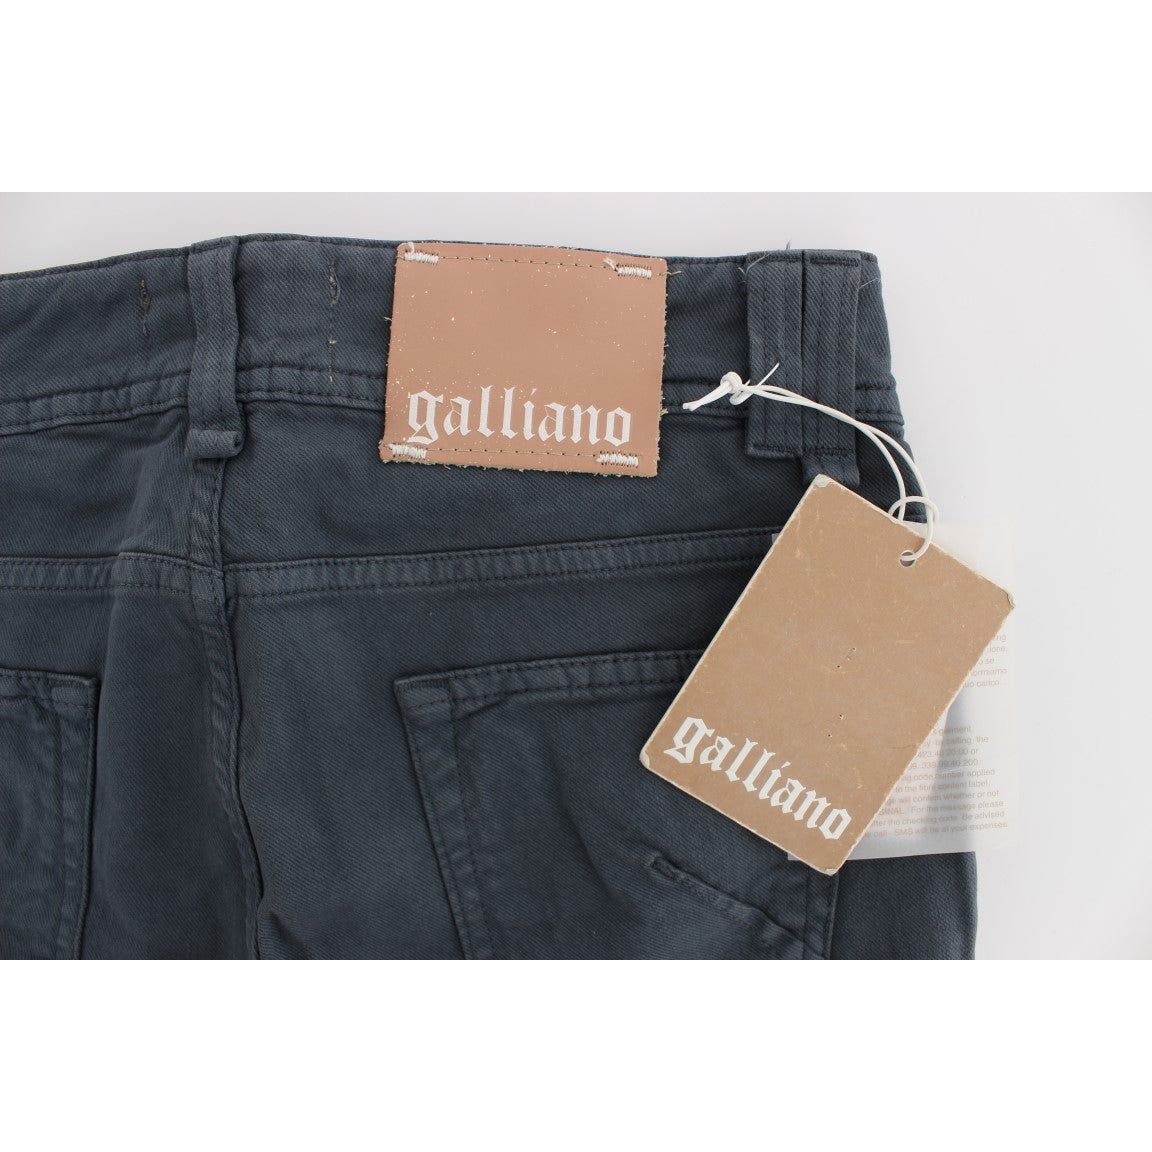 John Galliano Elegant Slim Fit Bootcut Jeans blue-cotton-blend-slim-fit-bootcut-jeans-2 Jeans & Pants 330188-blue-cotton-blend-slim-fit-bootcut-jeans-3-6.jpg